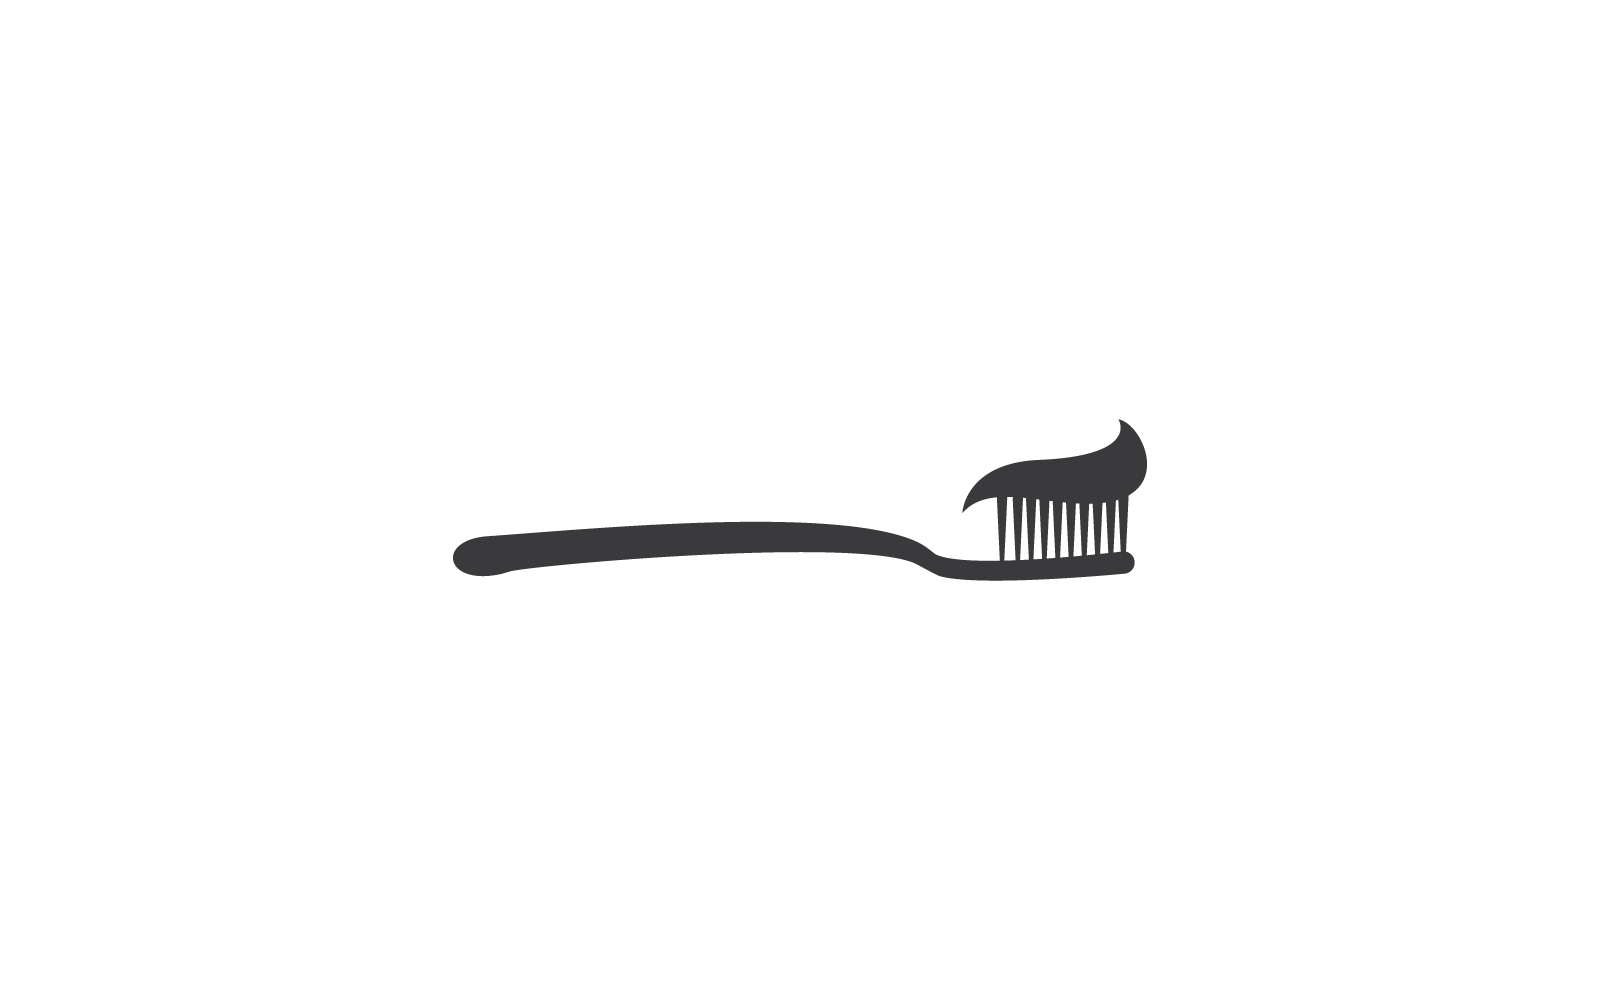 Toothbrush logo design vector template